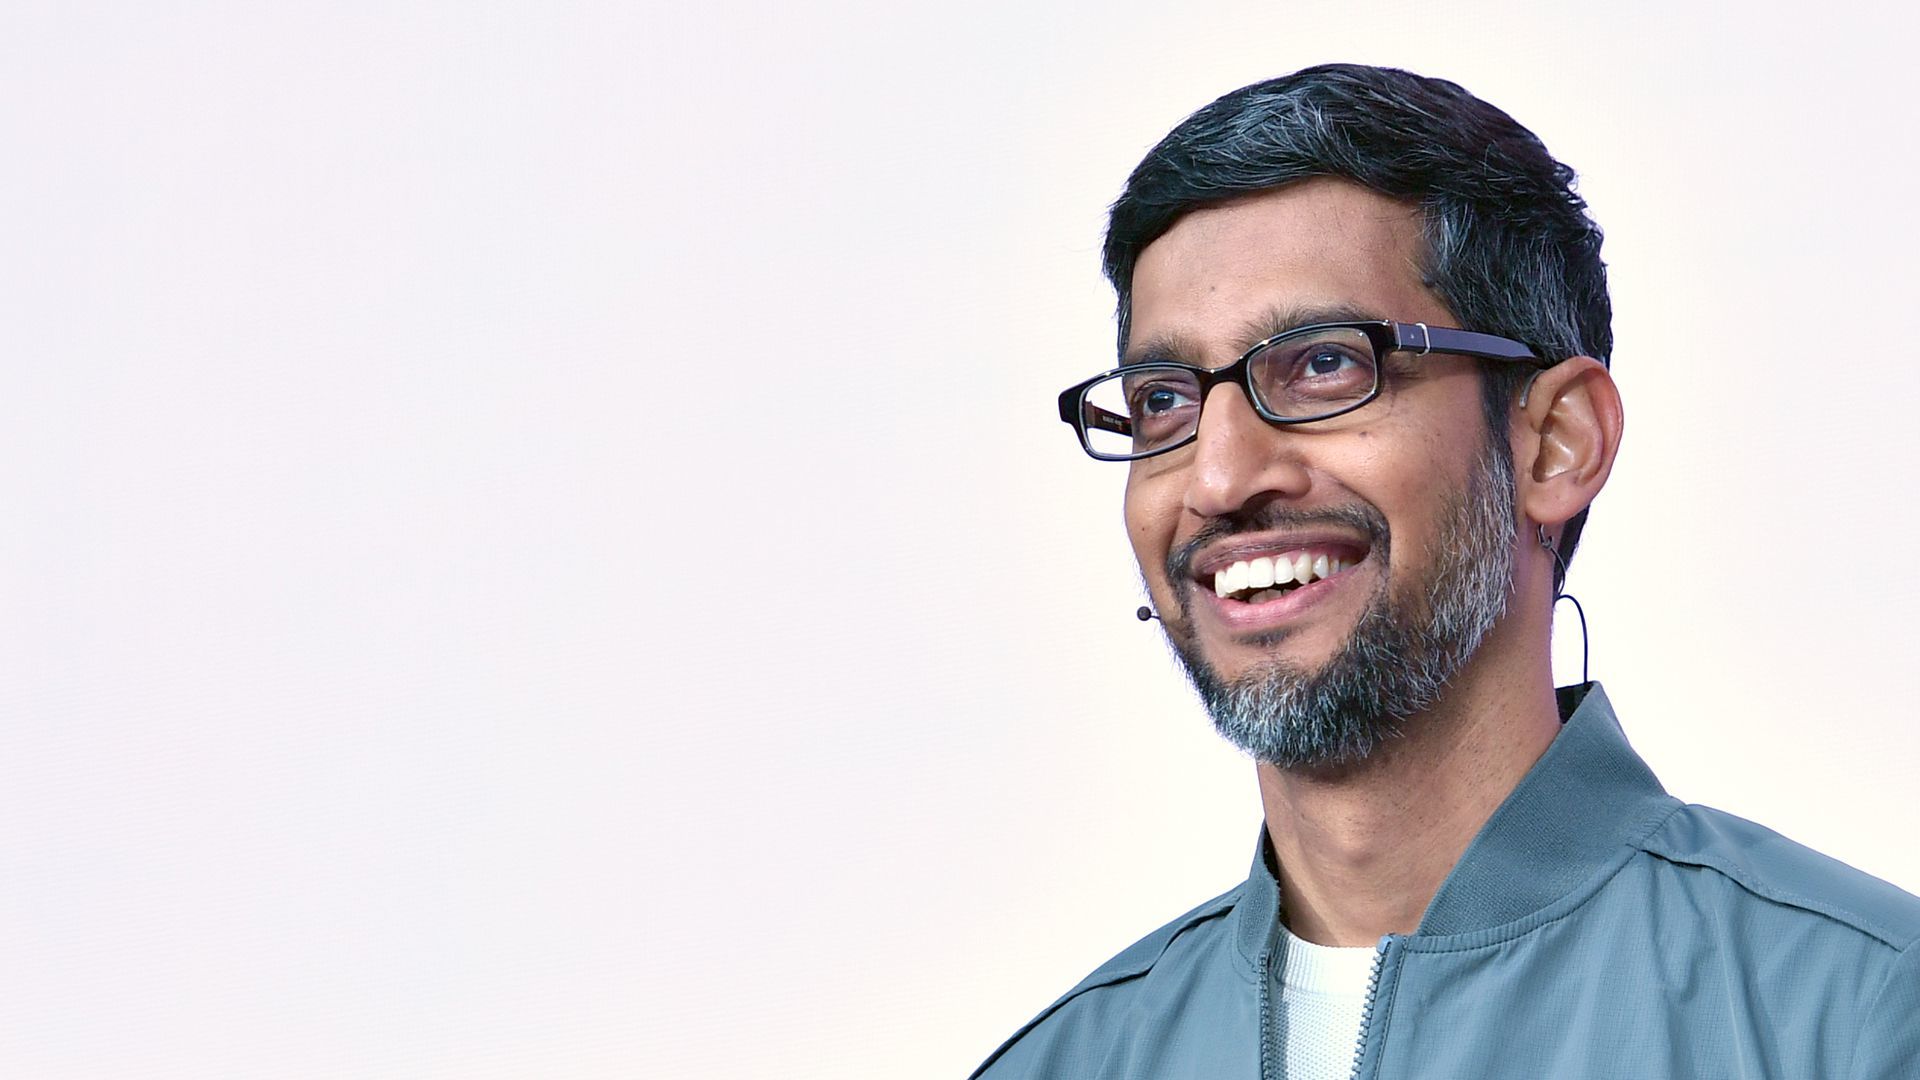 More information about "Ο Sundar Pichai αναλαμβάνει νέος CEO της Alphabet (Google), καθώς οι συνιδρυτές, Sergey Brin και Larry Page, αποσύρονται"